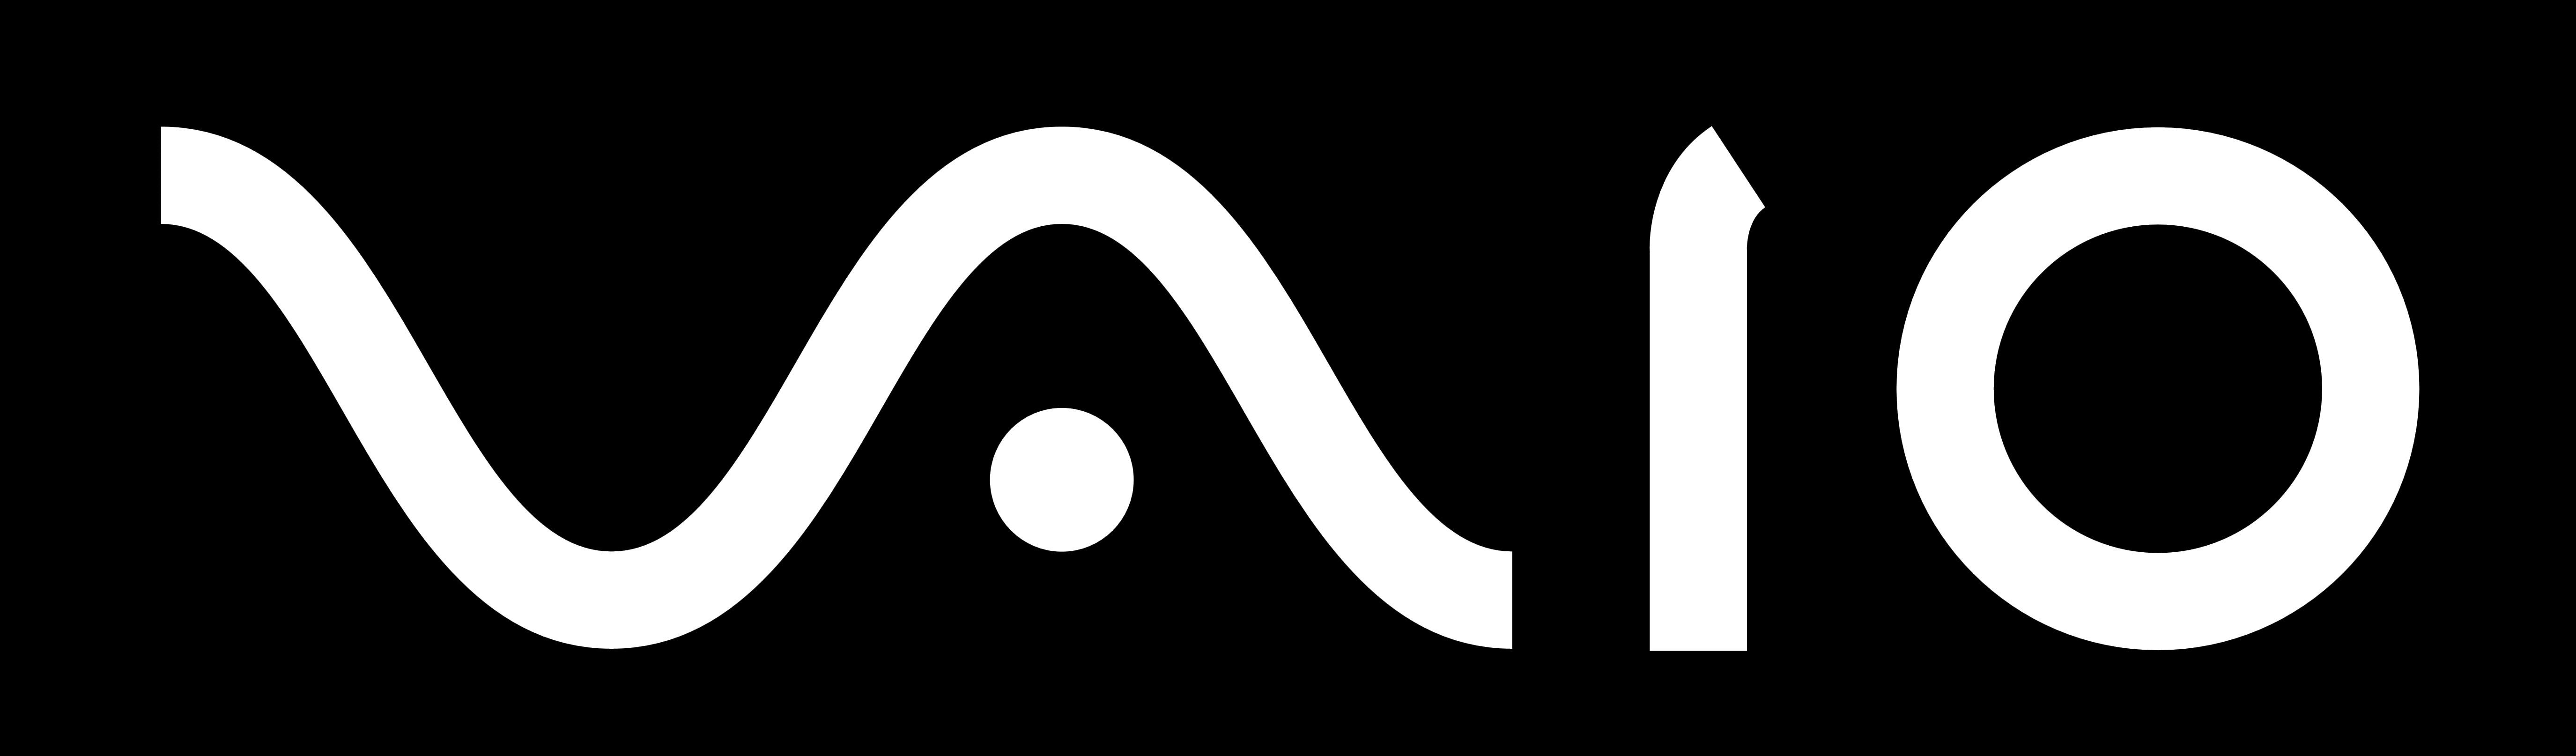 Vaio Logo - VAIO – Logos Download